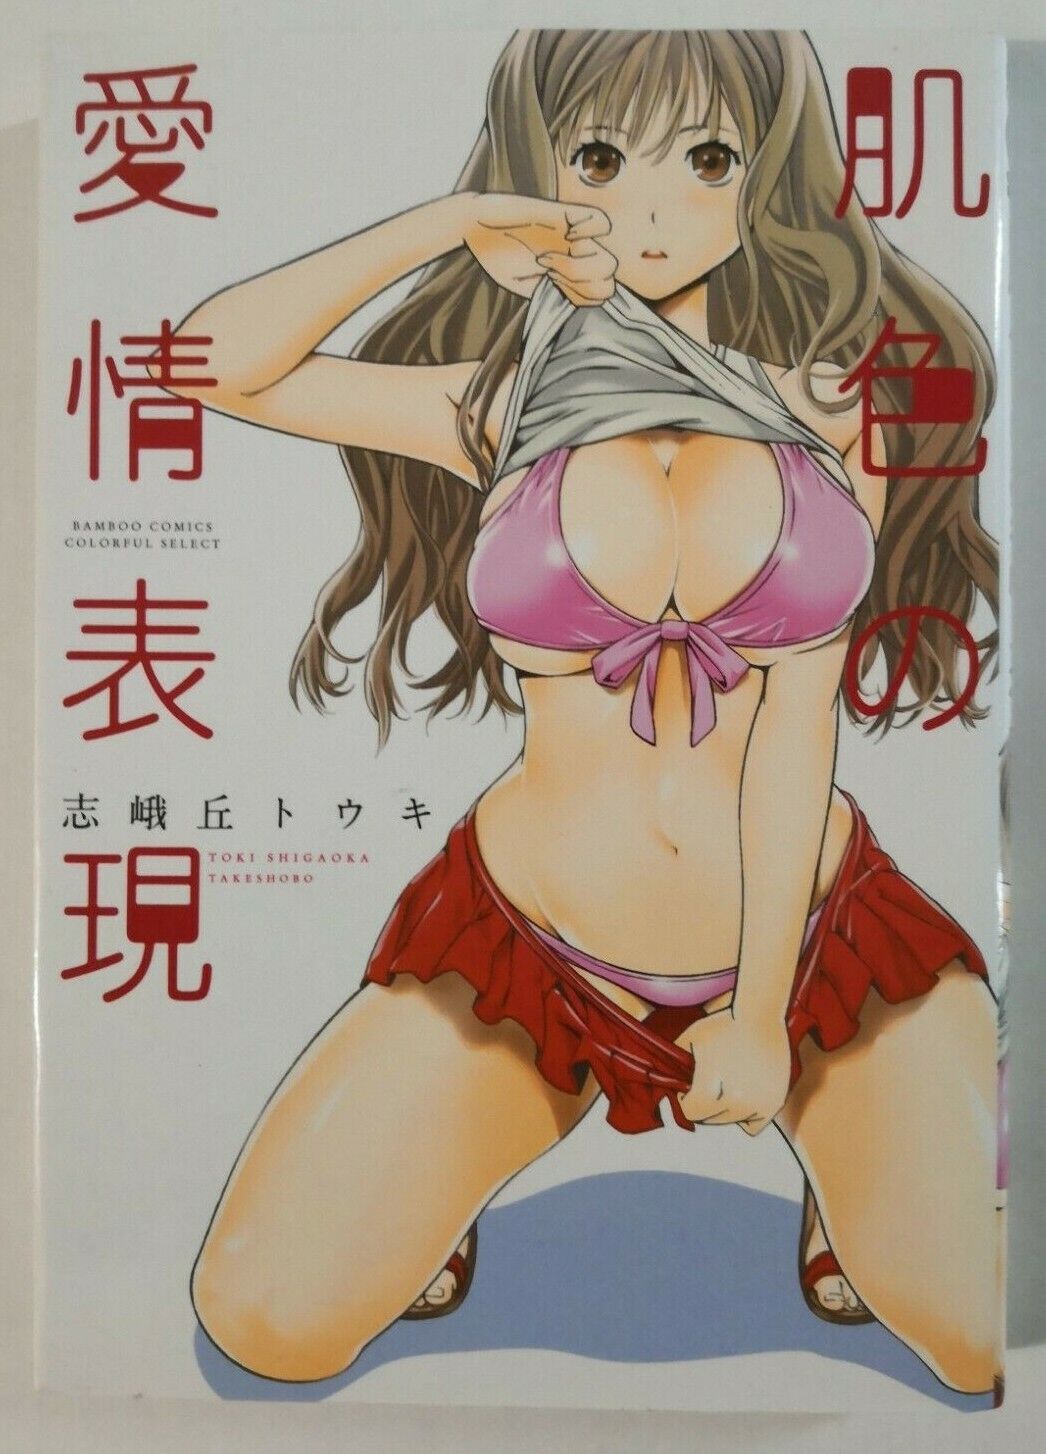 Skin-colored affection (Bamboo Comics) 2013 Japanese Language Manga US Seller